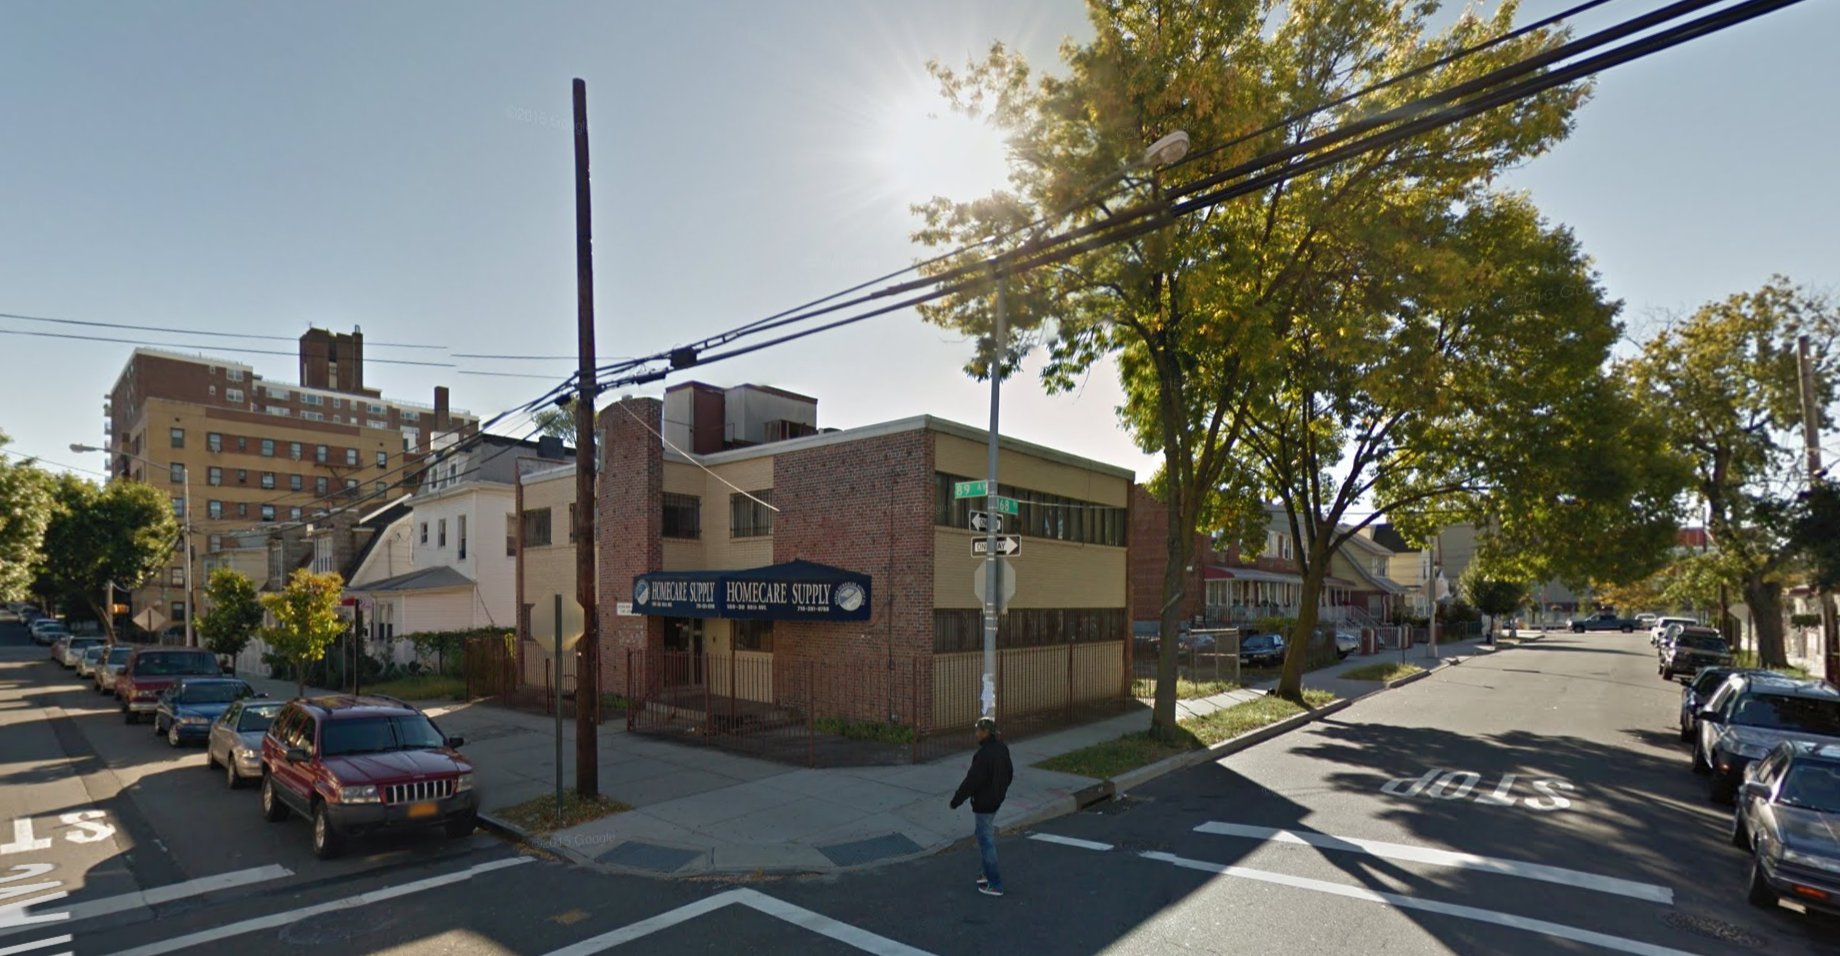 168-30 89th Avenue, image via Google Maps